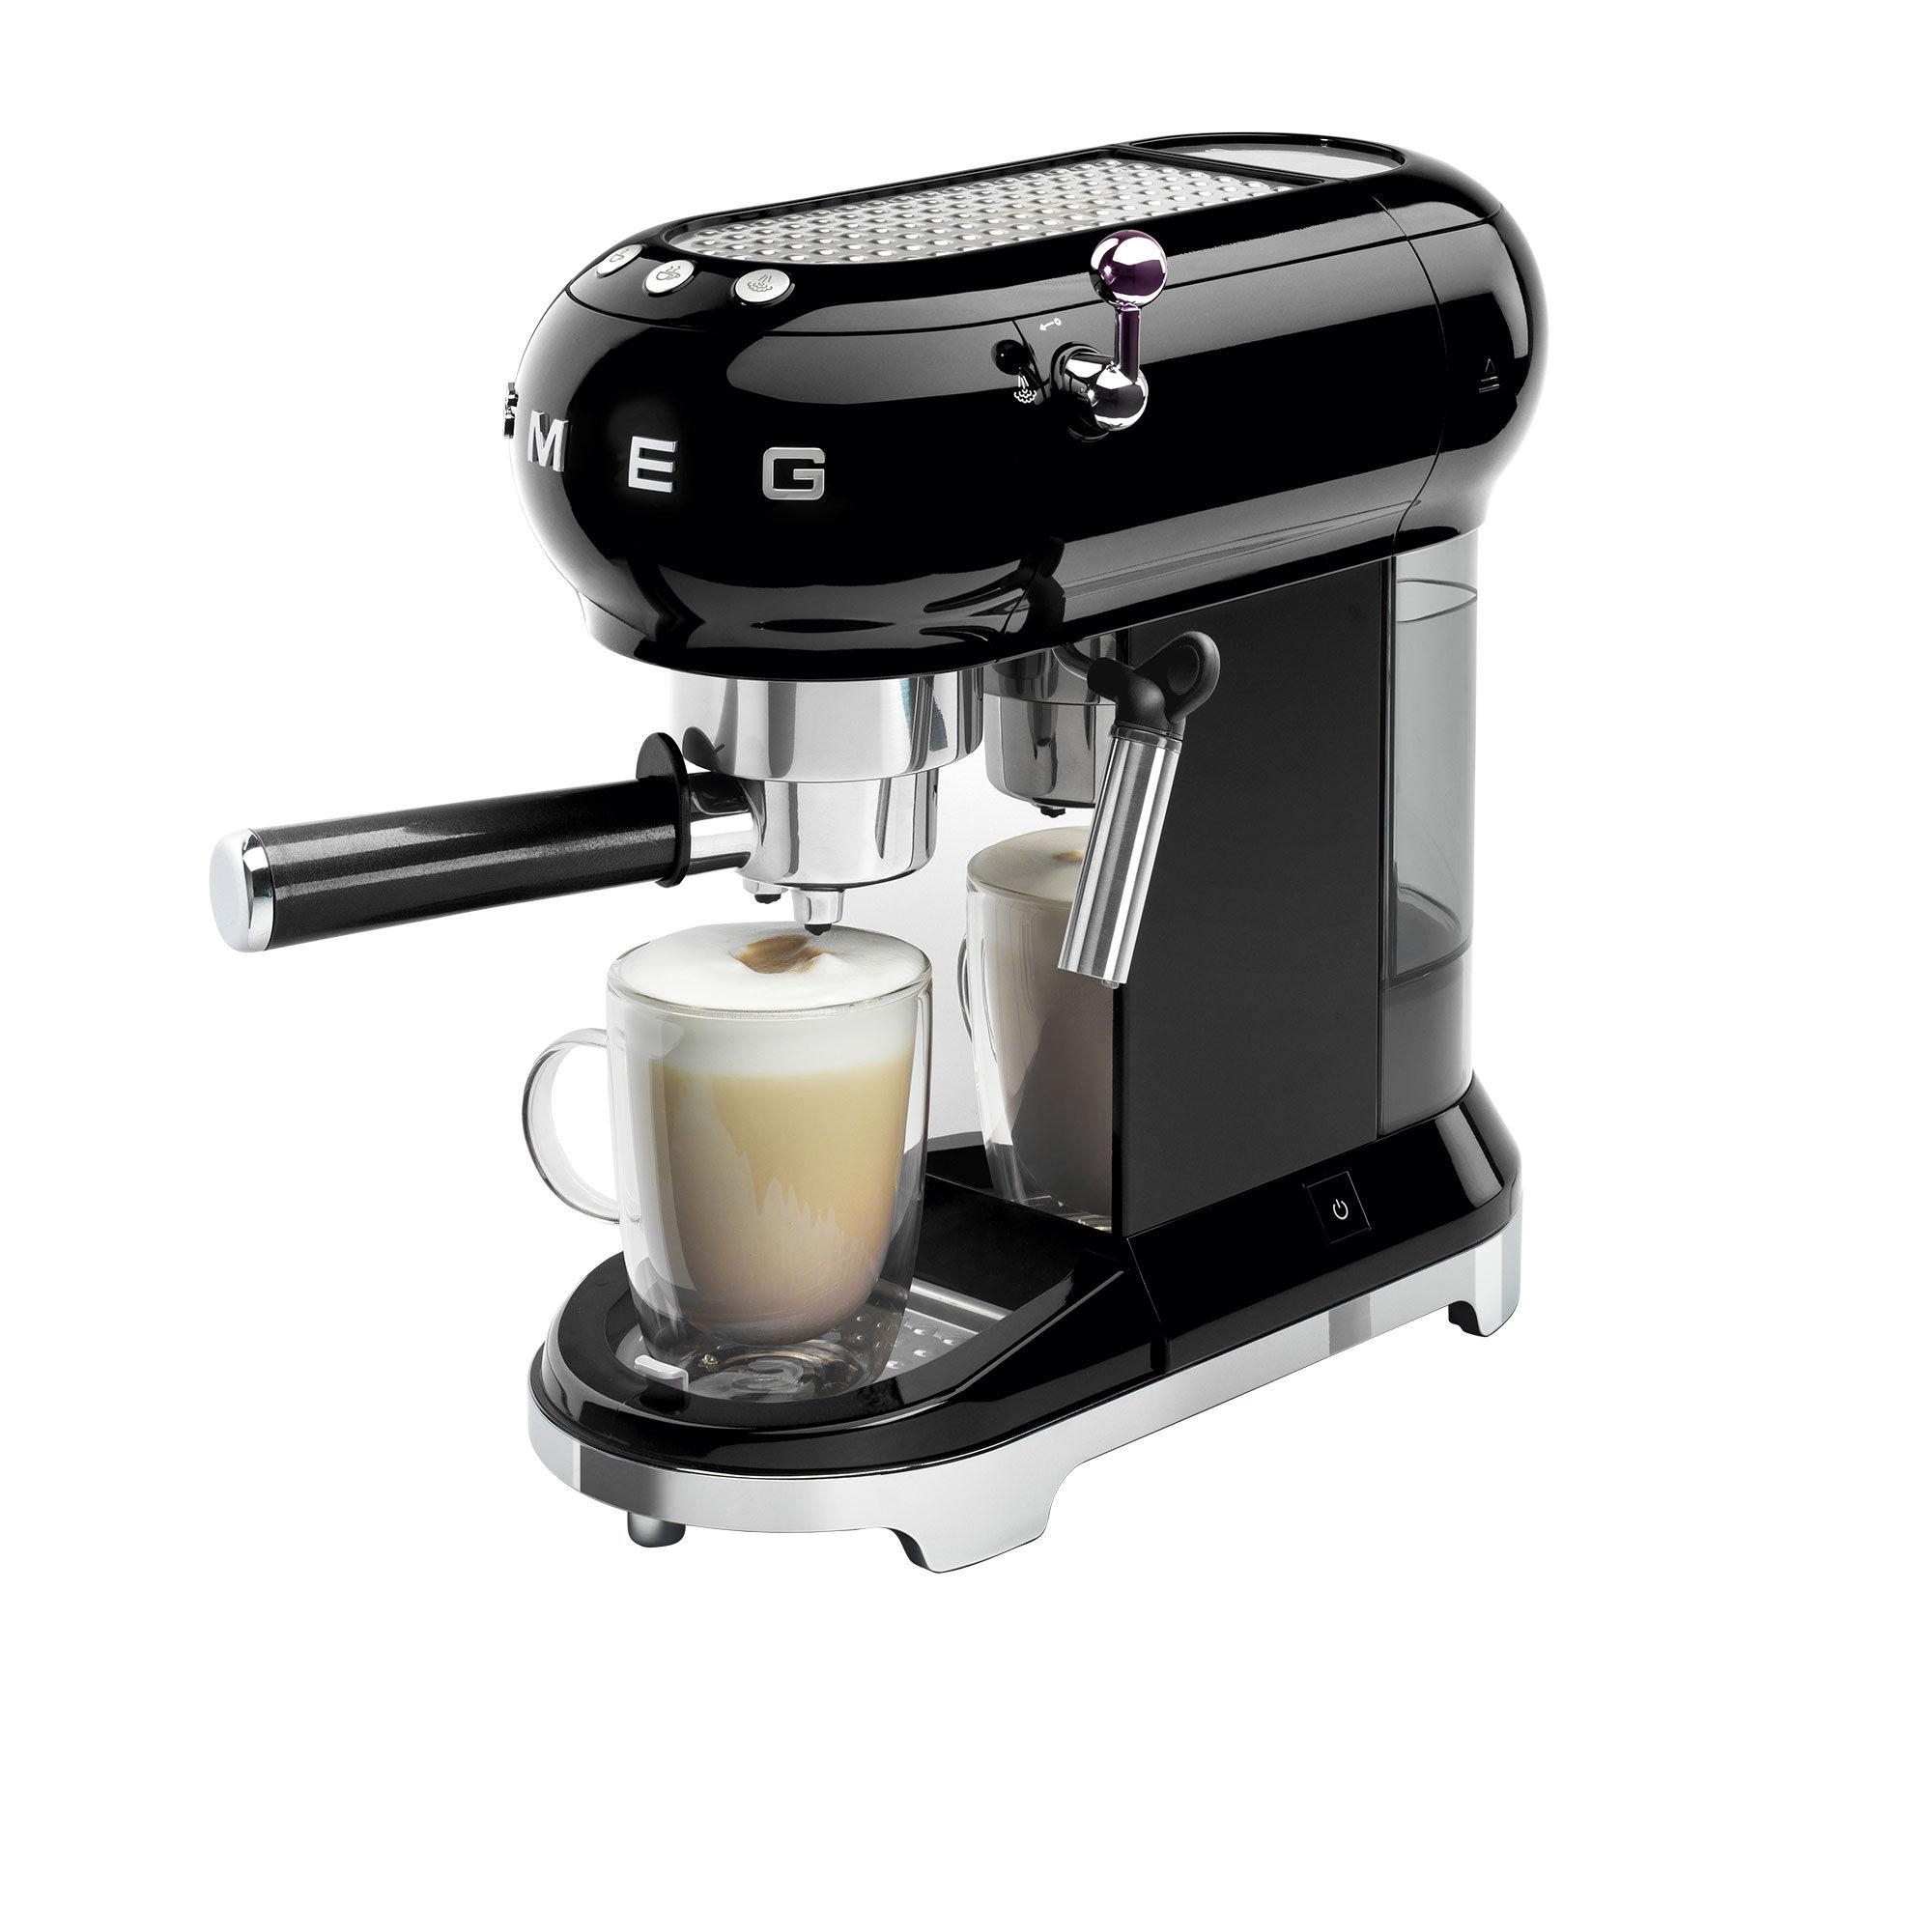 Smeg 50's Retro Style Espresso Coffee Machine Black Image 4